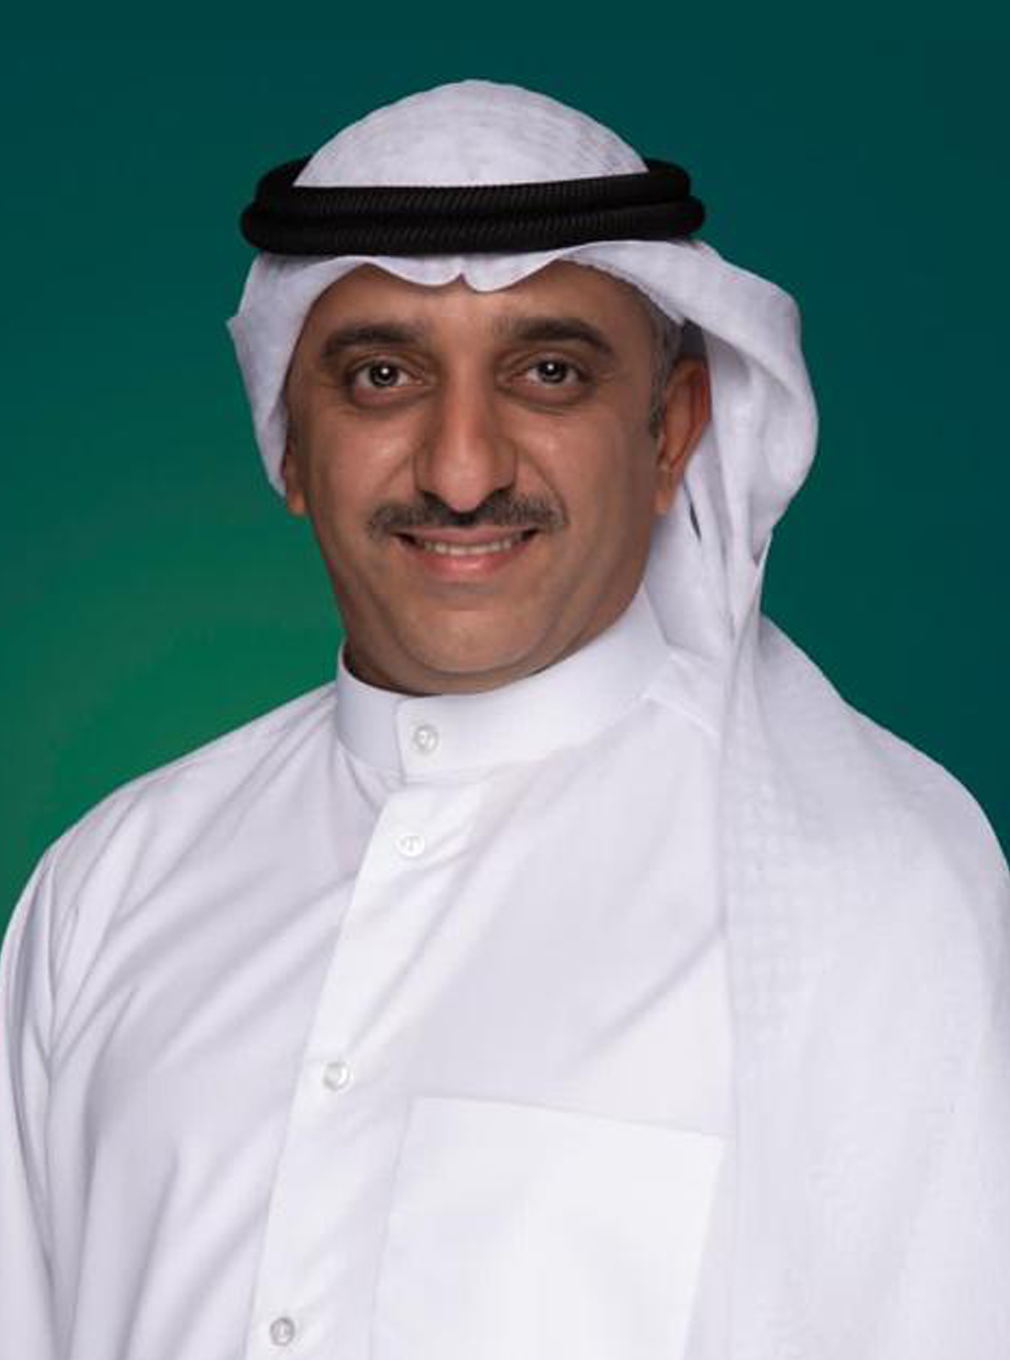 Mr. Ahmed Al-Sumait